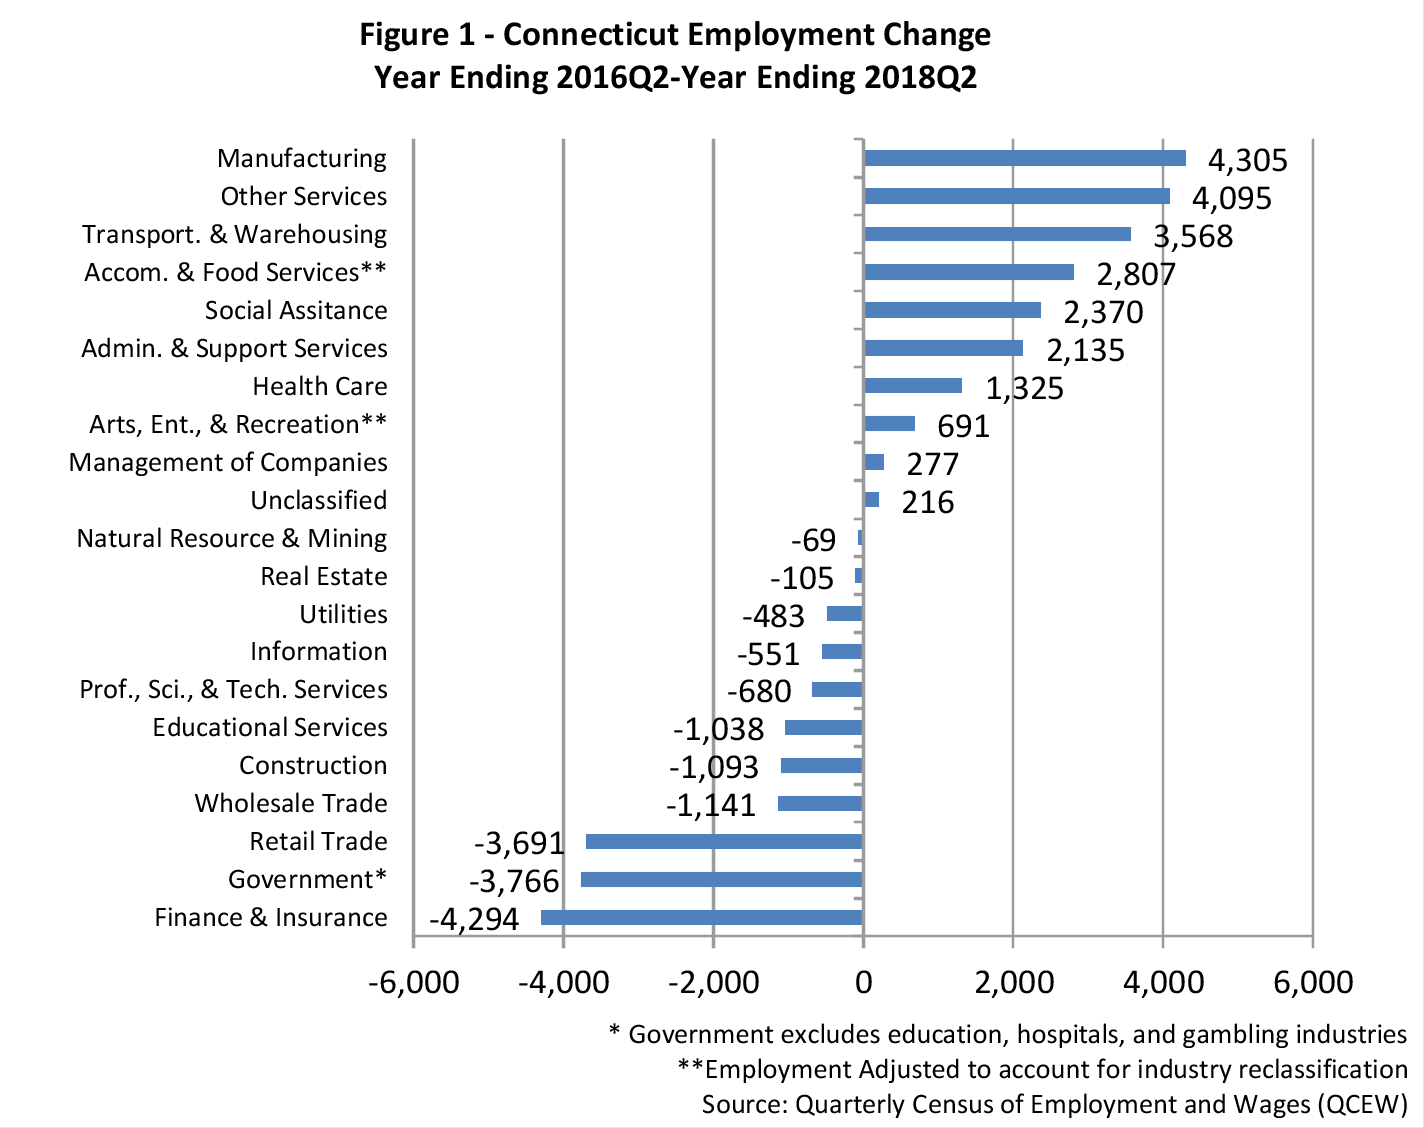 Figure 1: Connecticut Employment Change Year Ending 2016Q2 Year Ending 2018Q2